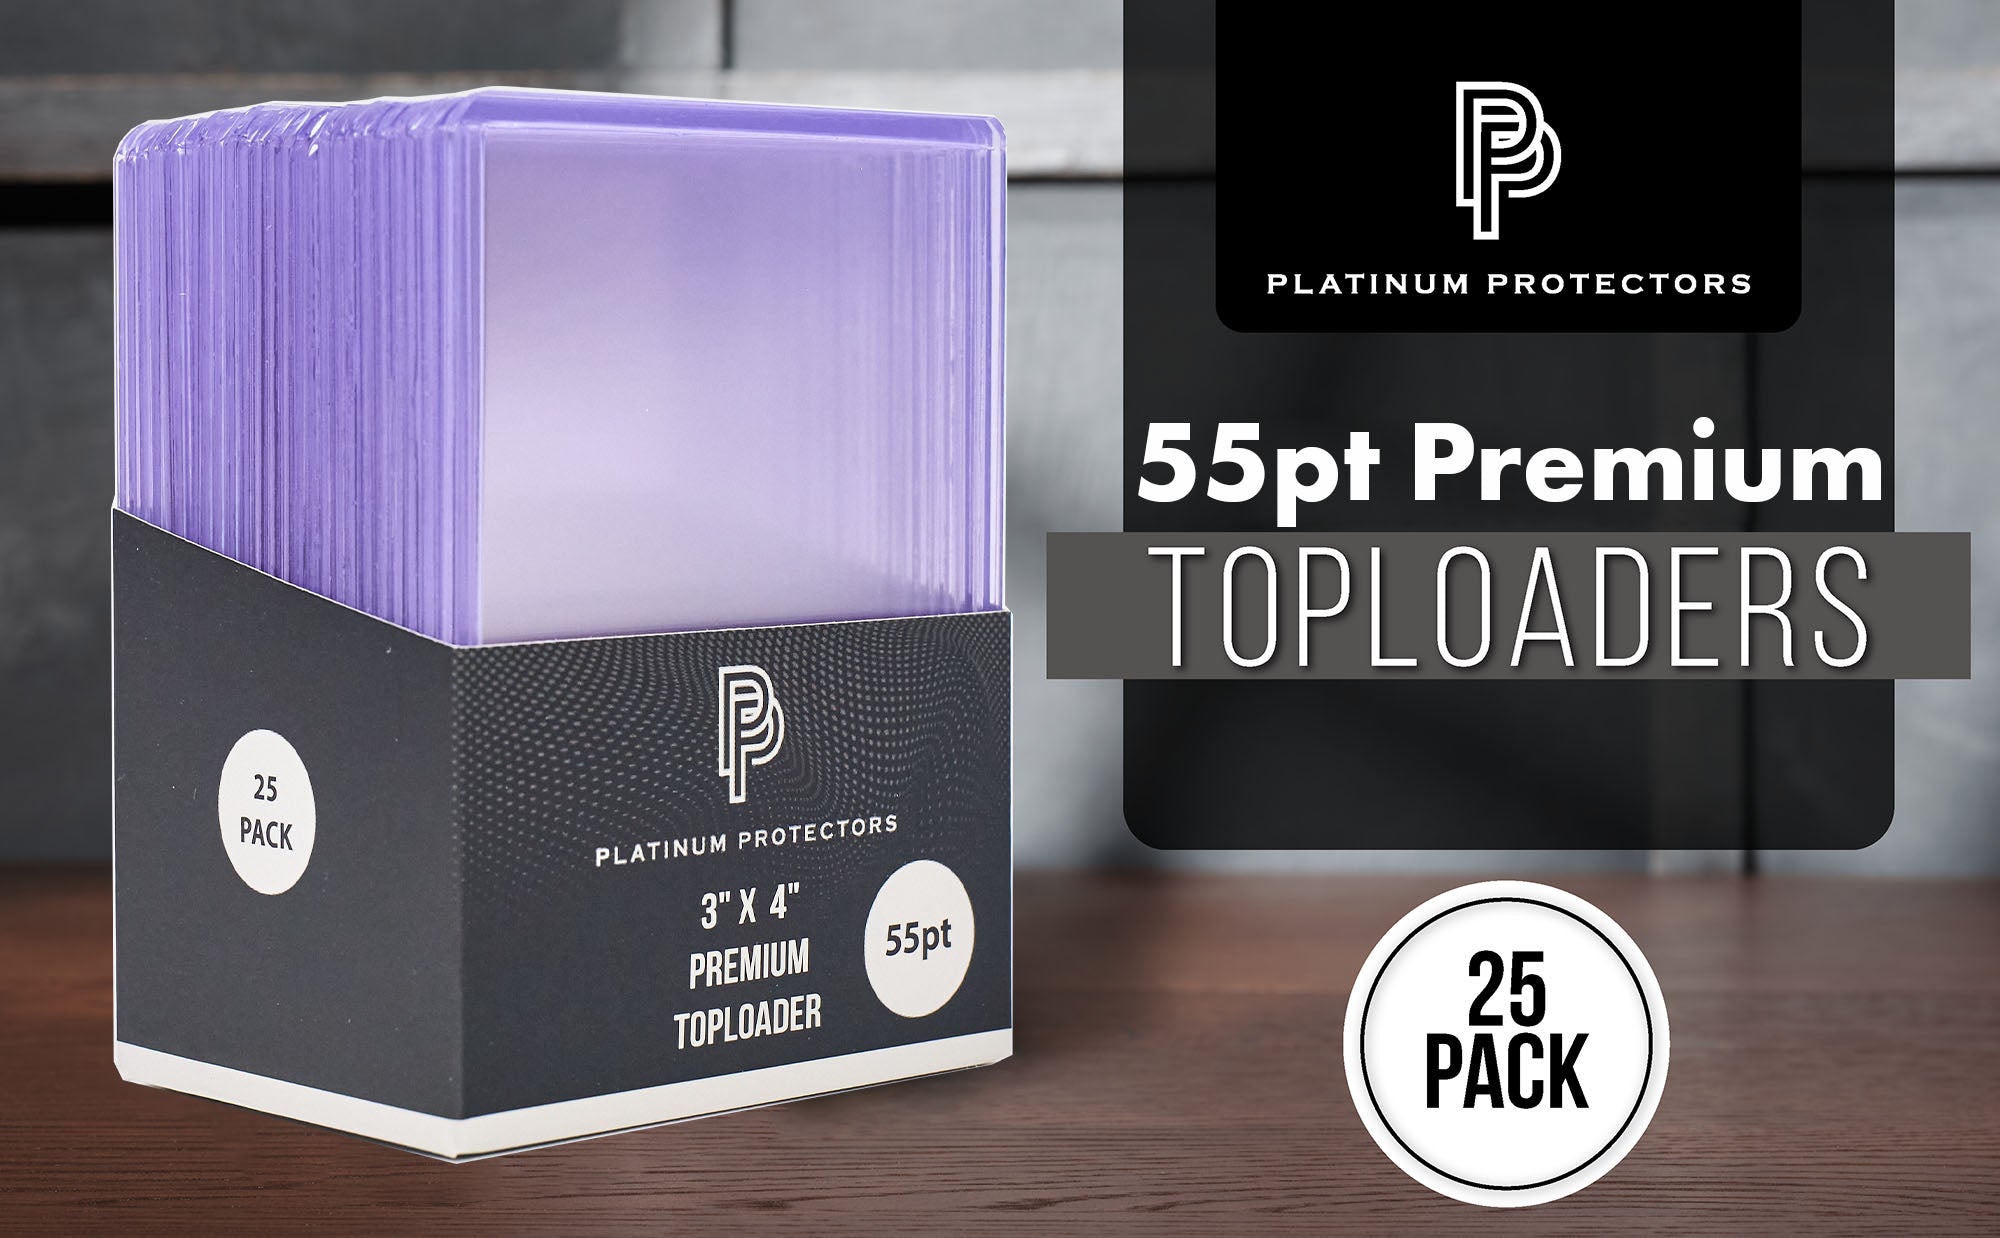 Platinum Protectors Premium Toploaders for Trading Cards - 55 pt